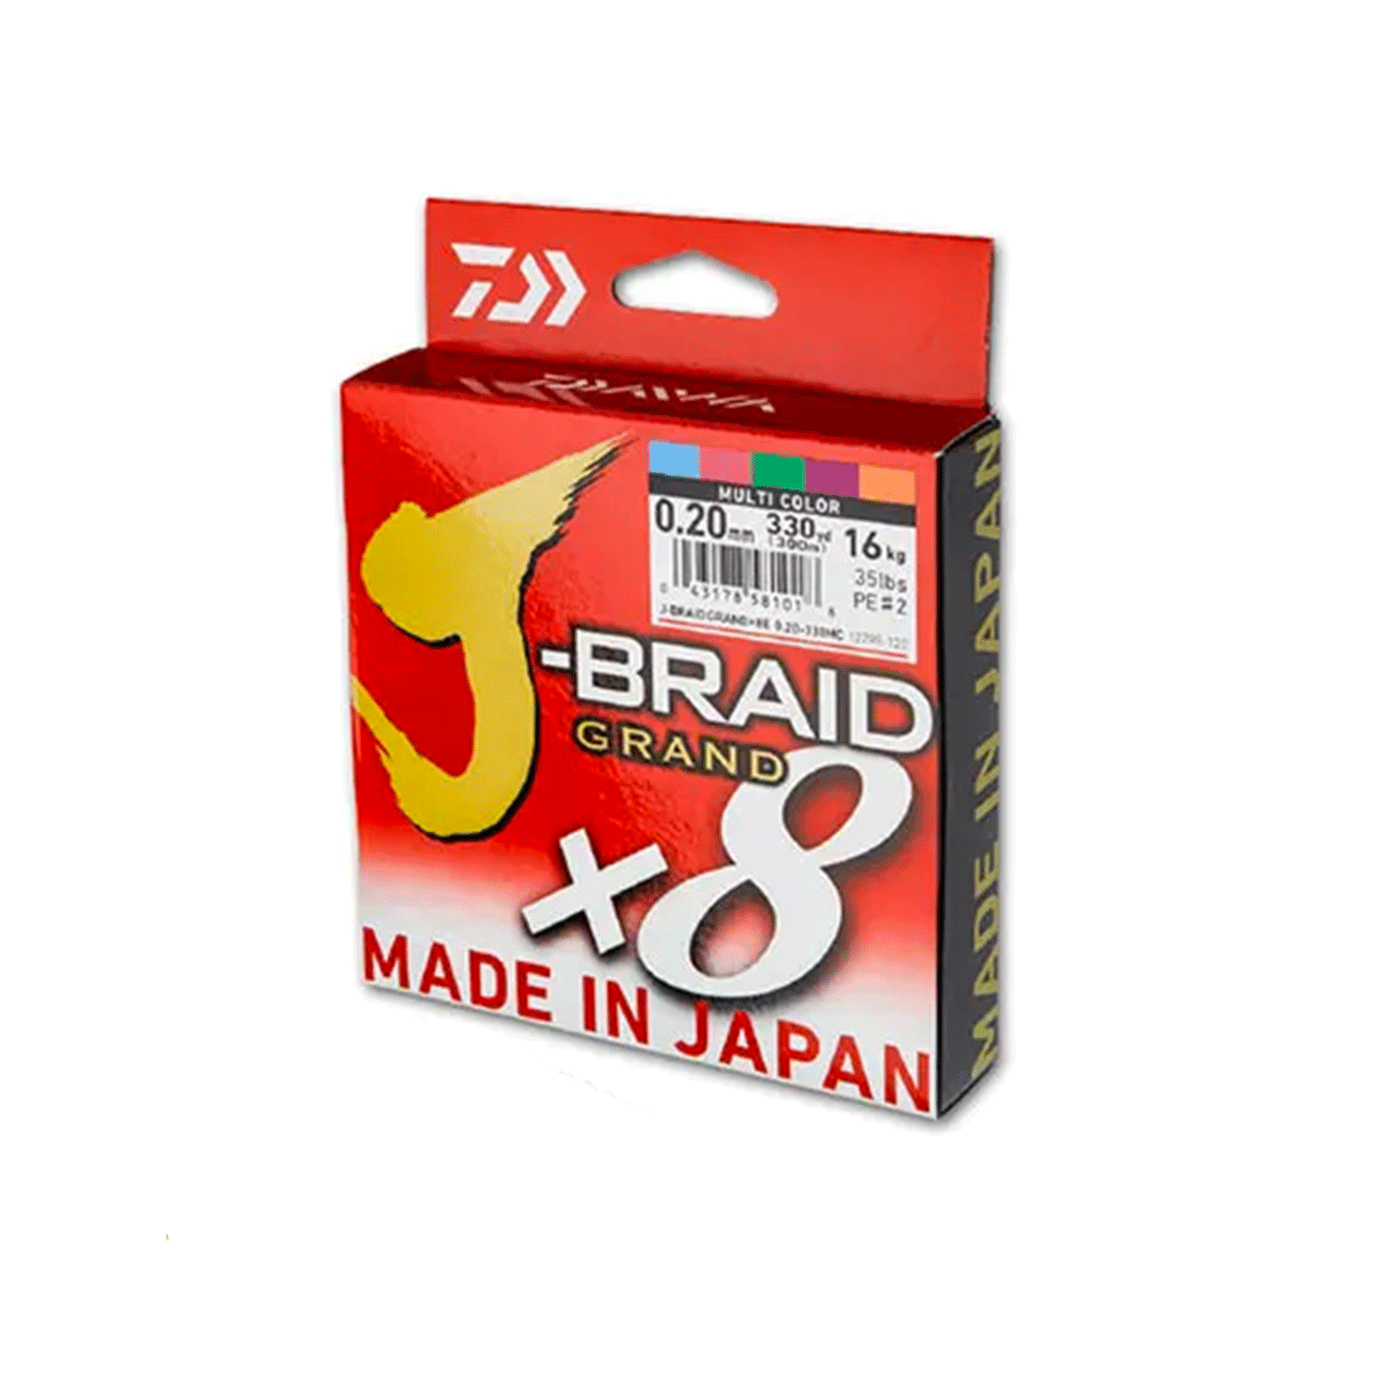 DAIWA - J-BRAID GRAND X8 Multi Color